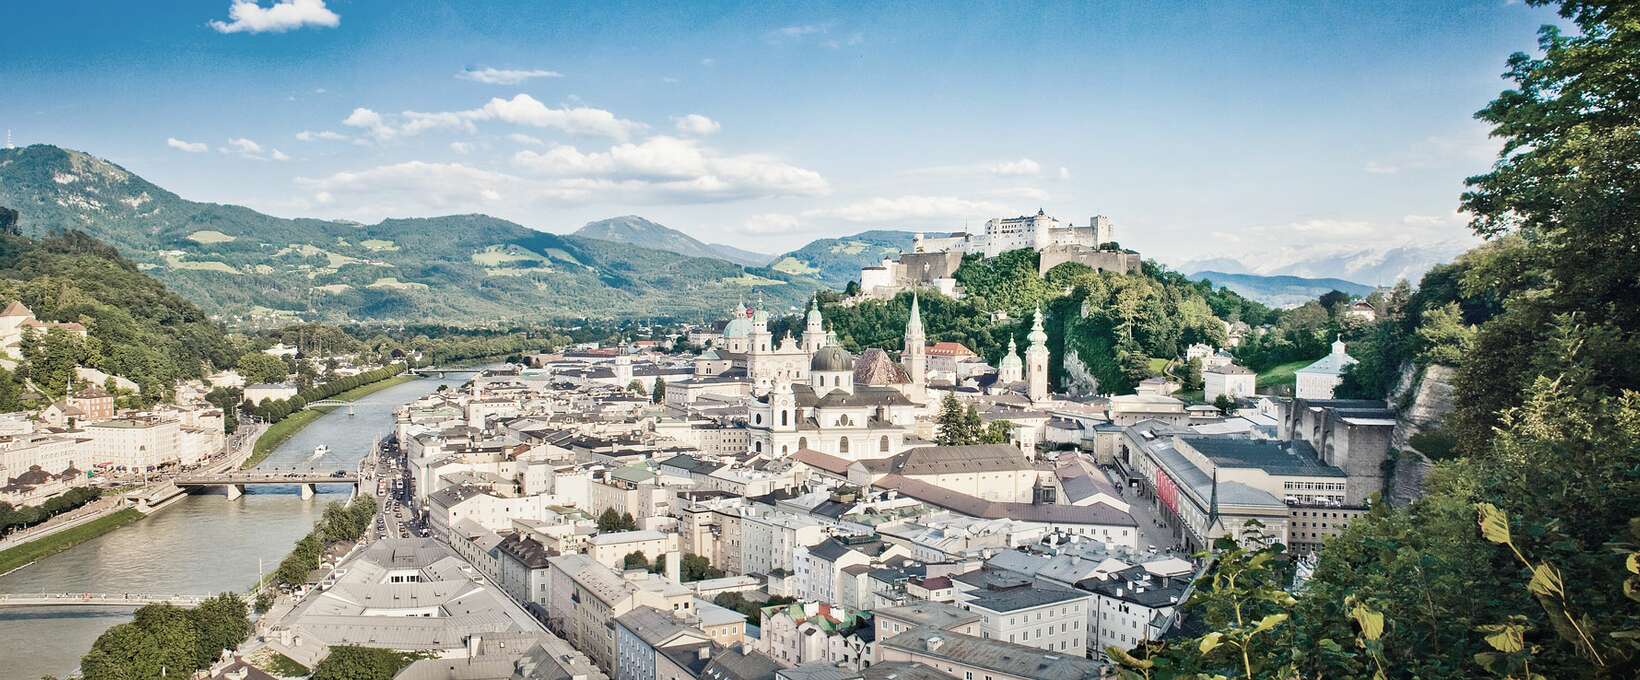 Panorama über die Stadt | Salzburg